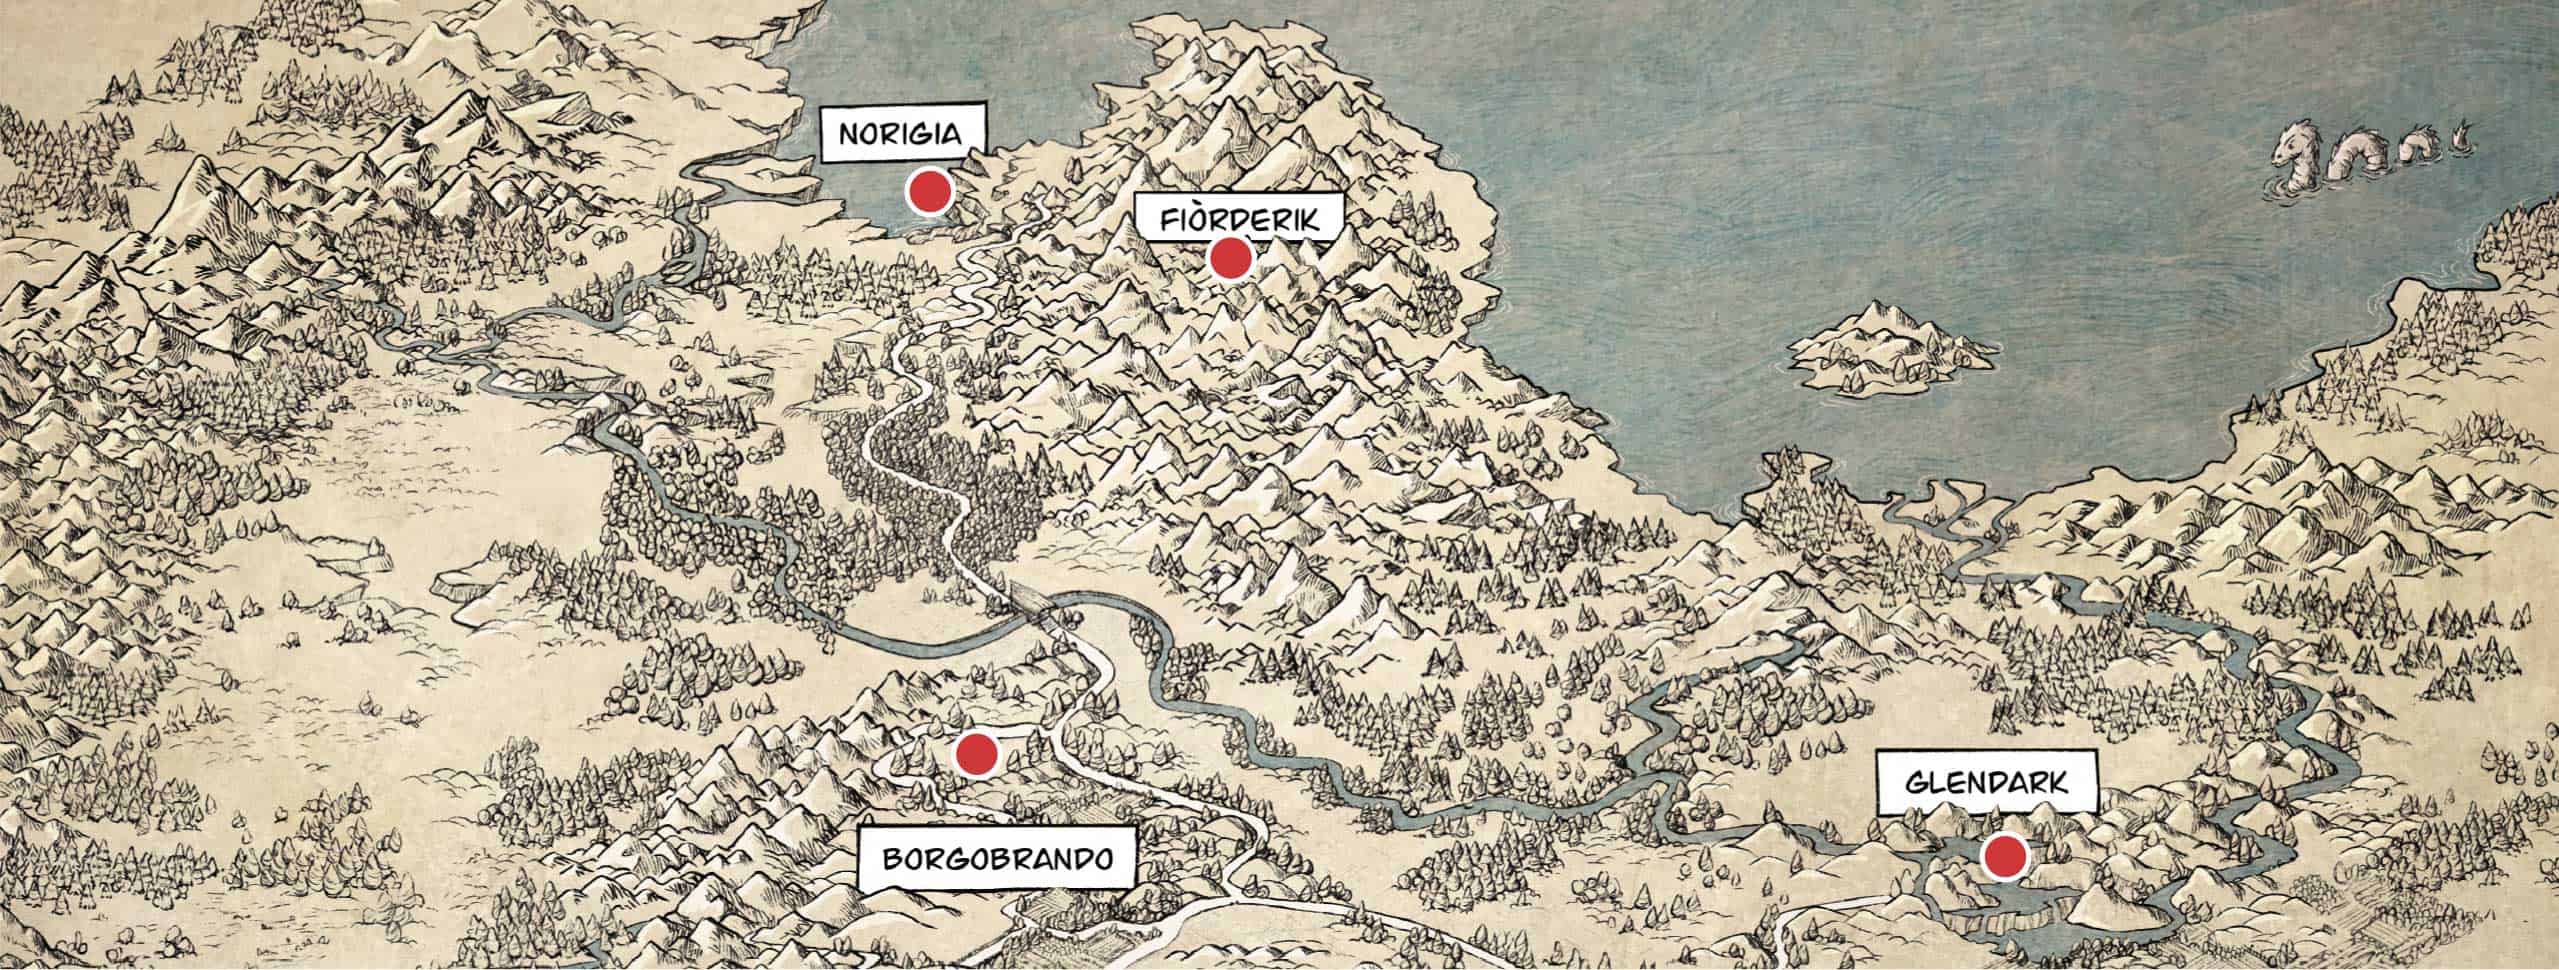 soeliok-fantasy-world-map